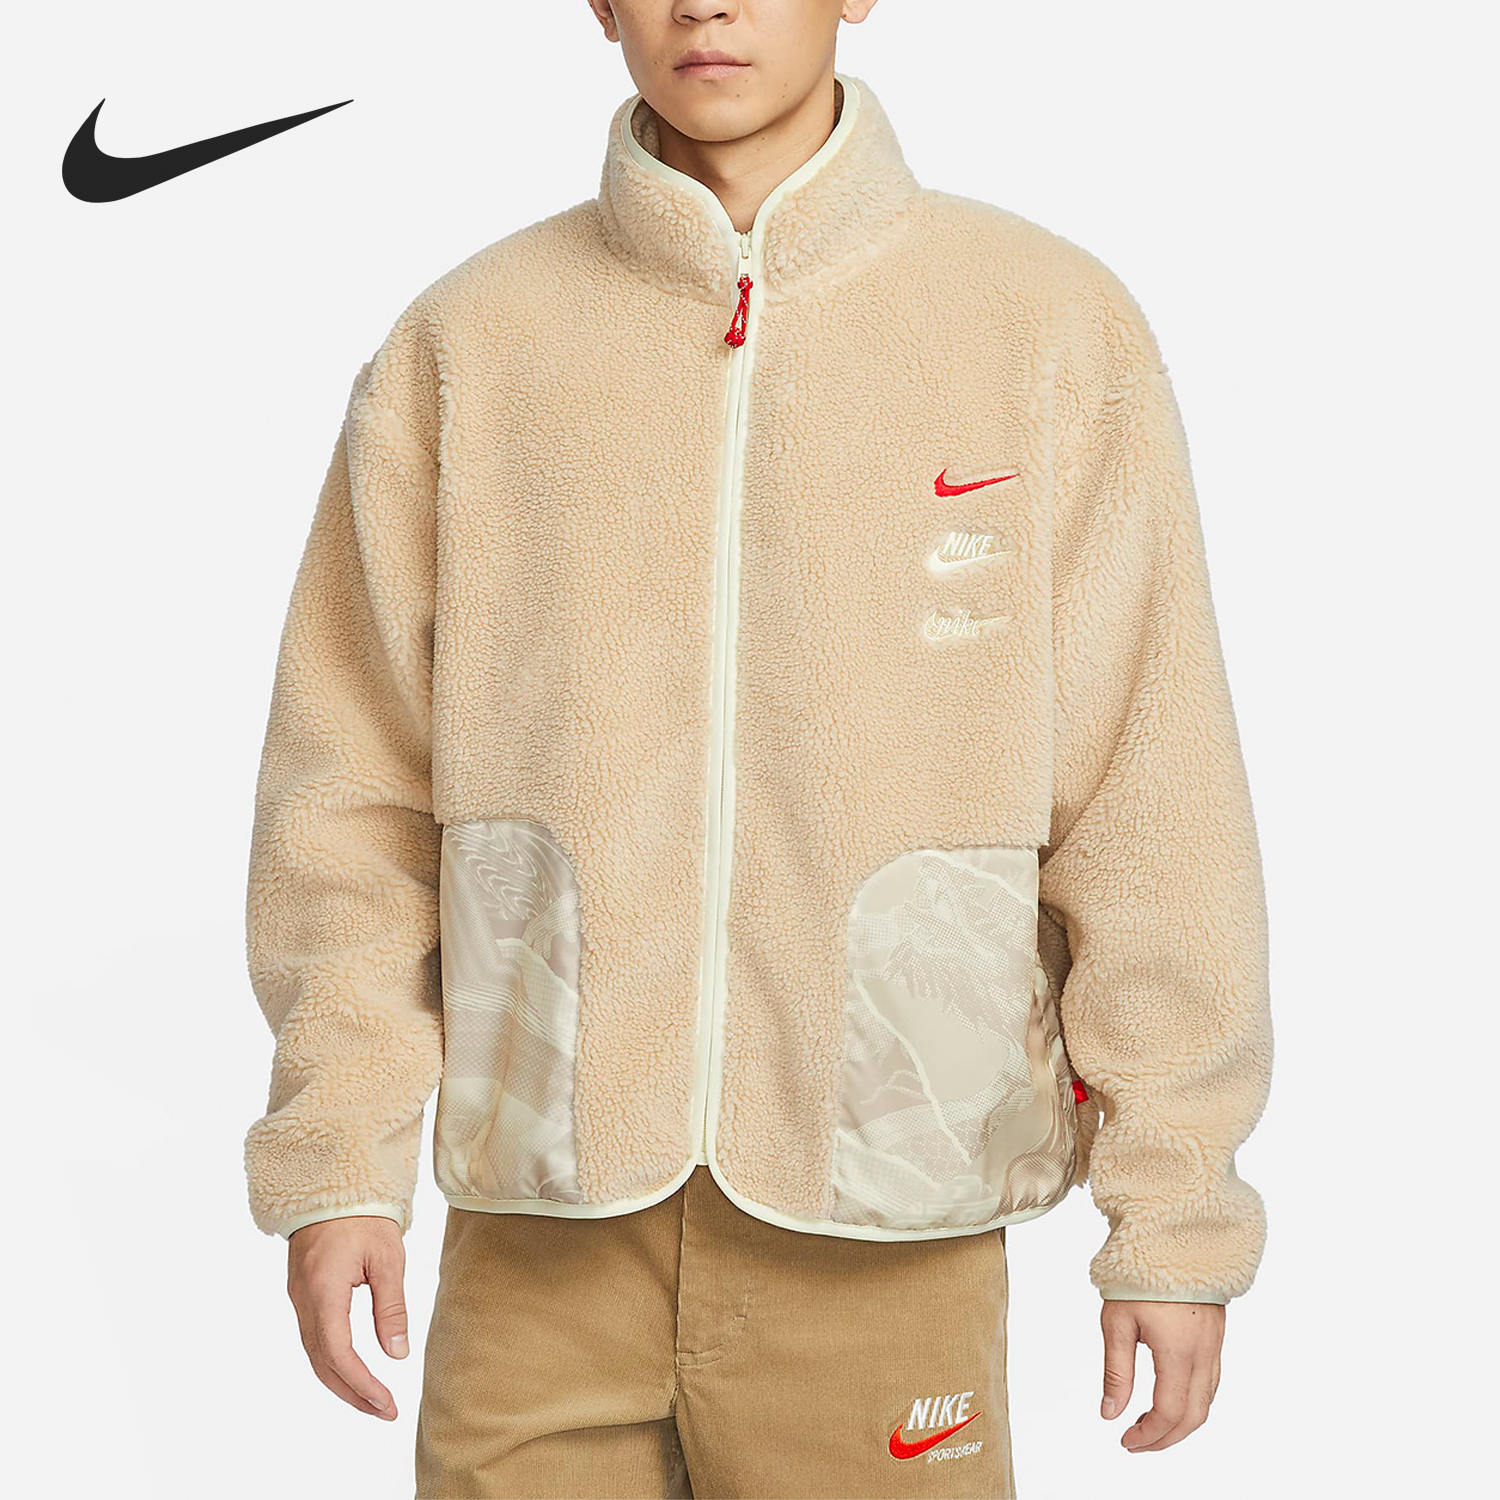 Nike/耐克正品龙年新款男士仿羊羔绒防风保暖夹克外套FZ6194